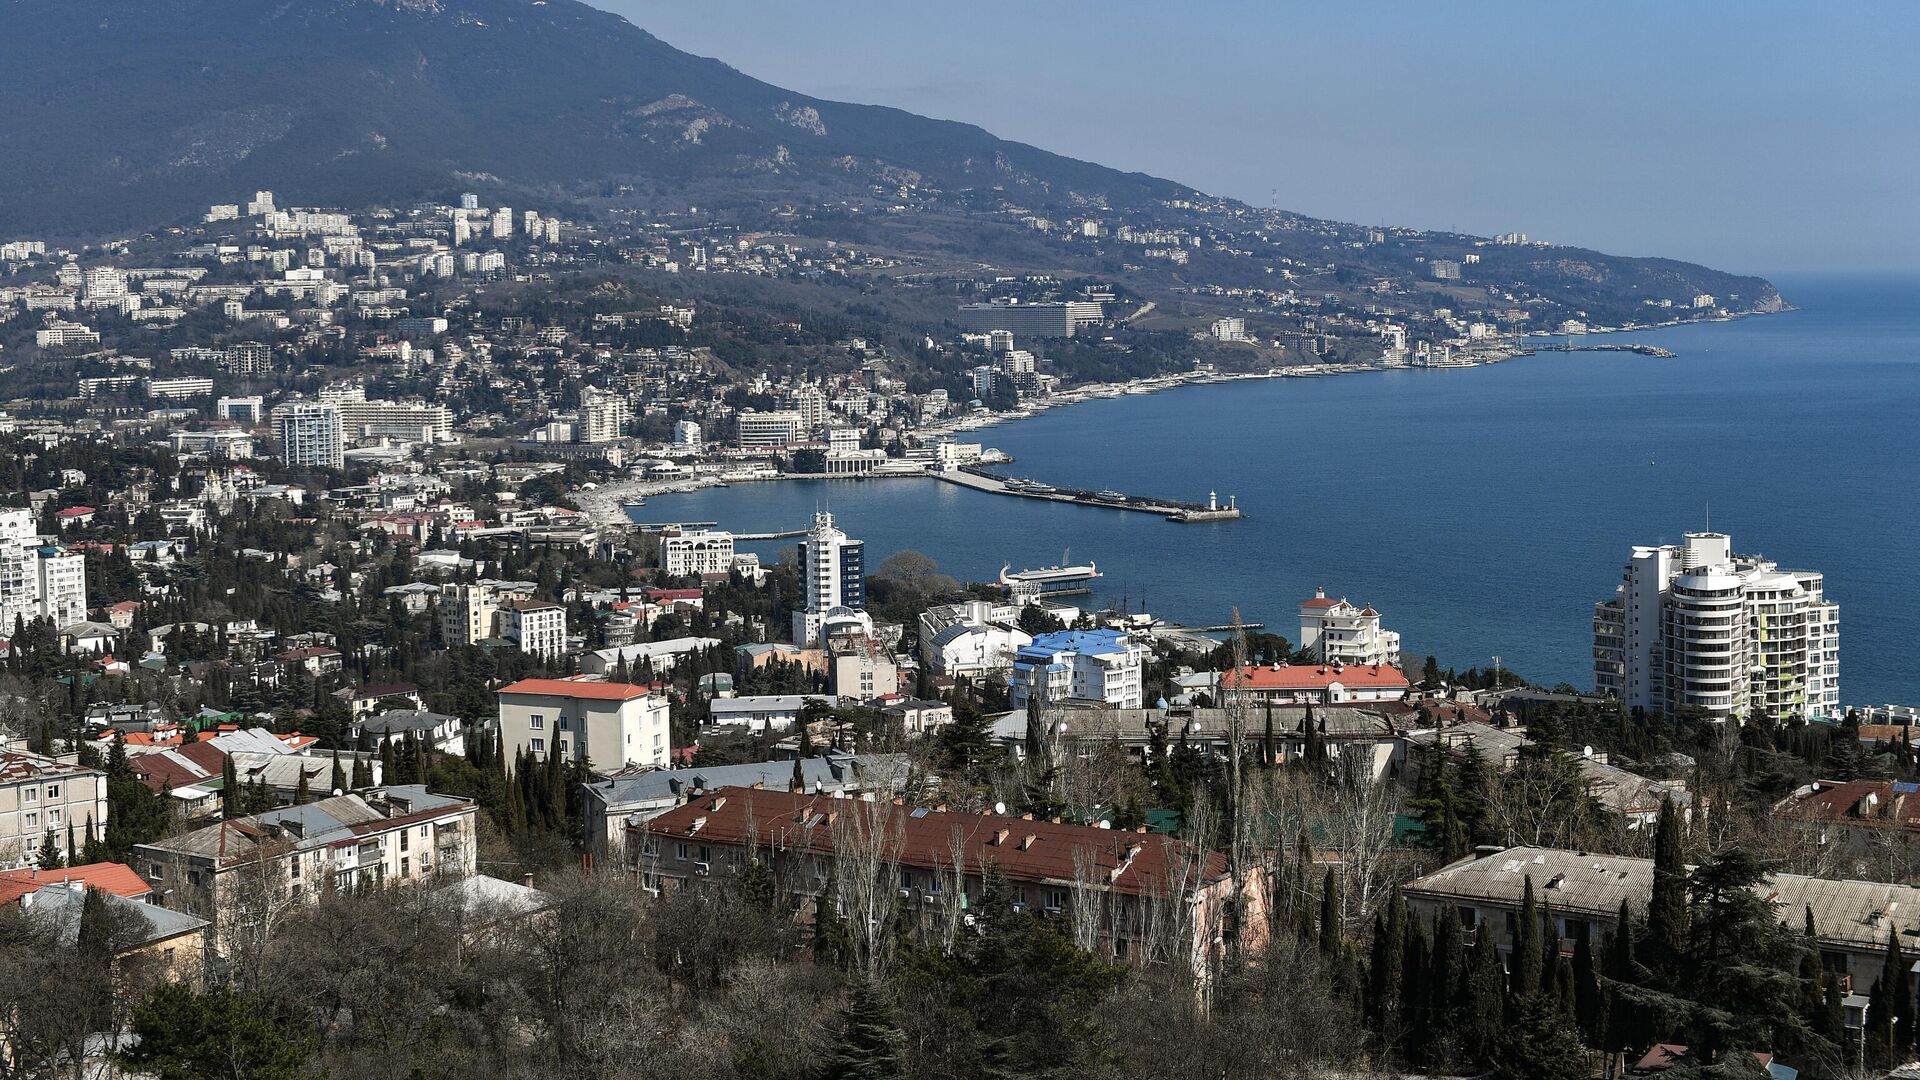 View of Yalta - 1920, 11/09/2021